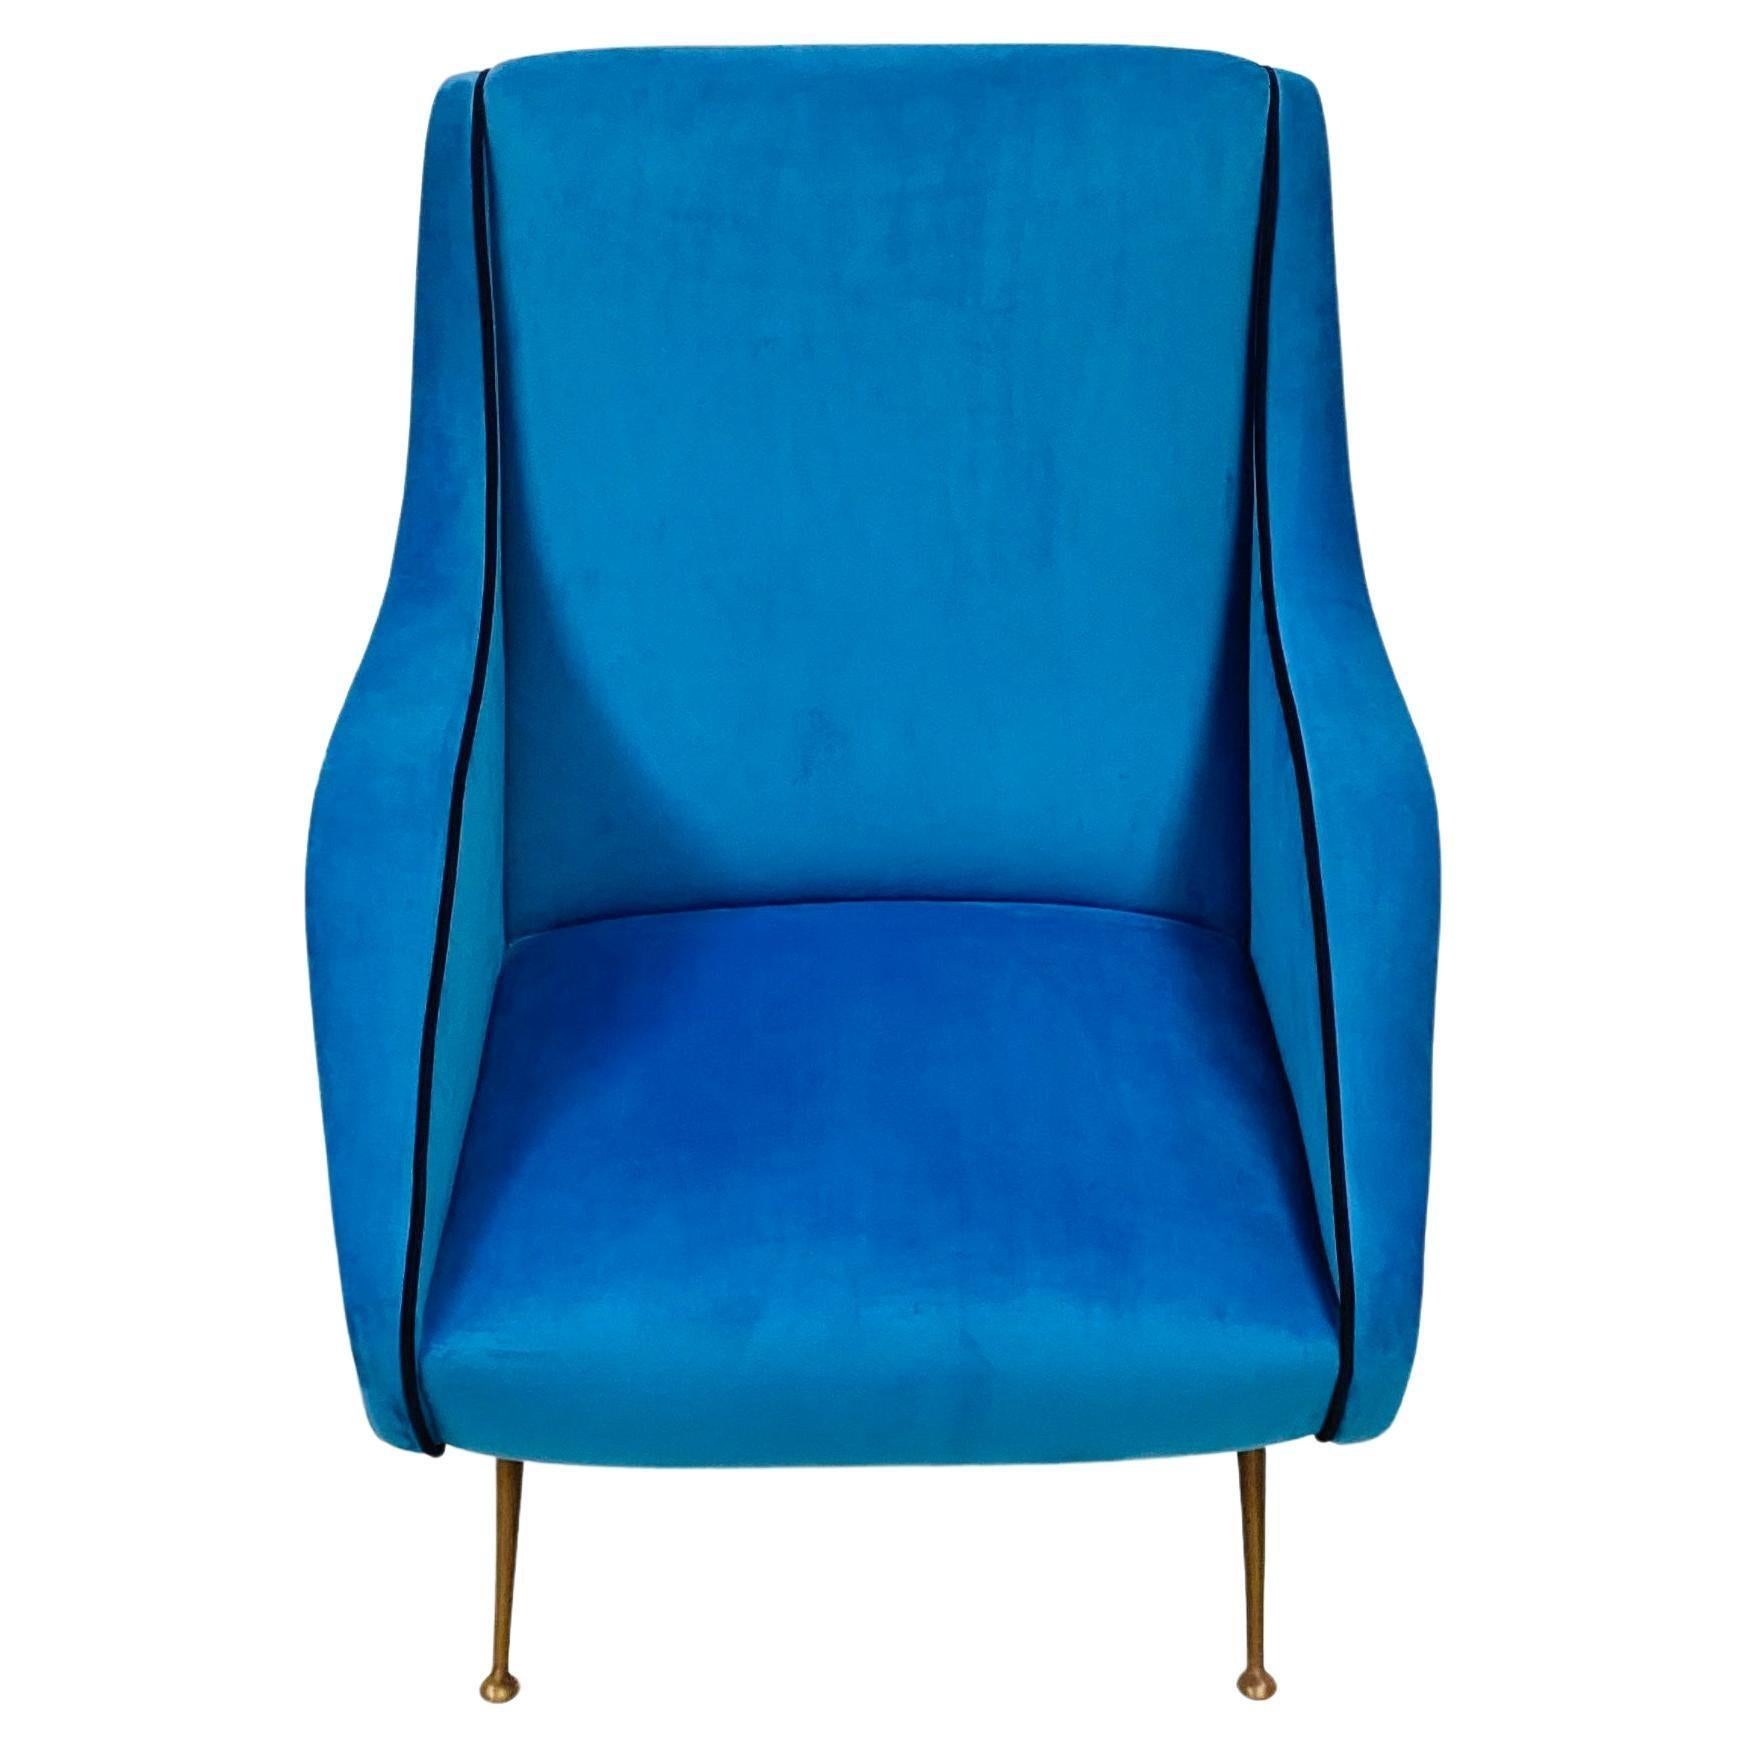 Vintage Italian Blue Velvet Armchair with Brass Legs by Carlo de Carli, 1950s For Sale 4